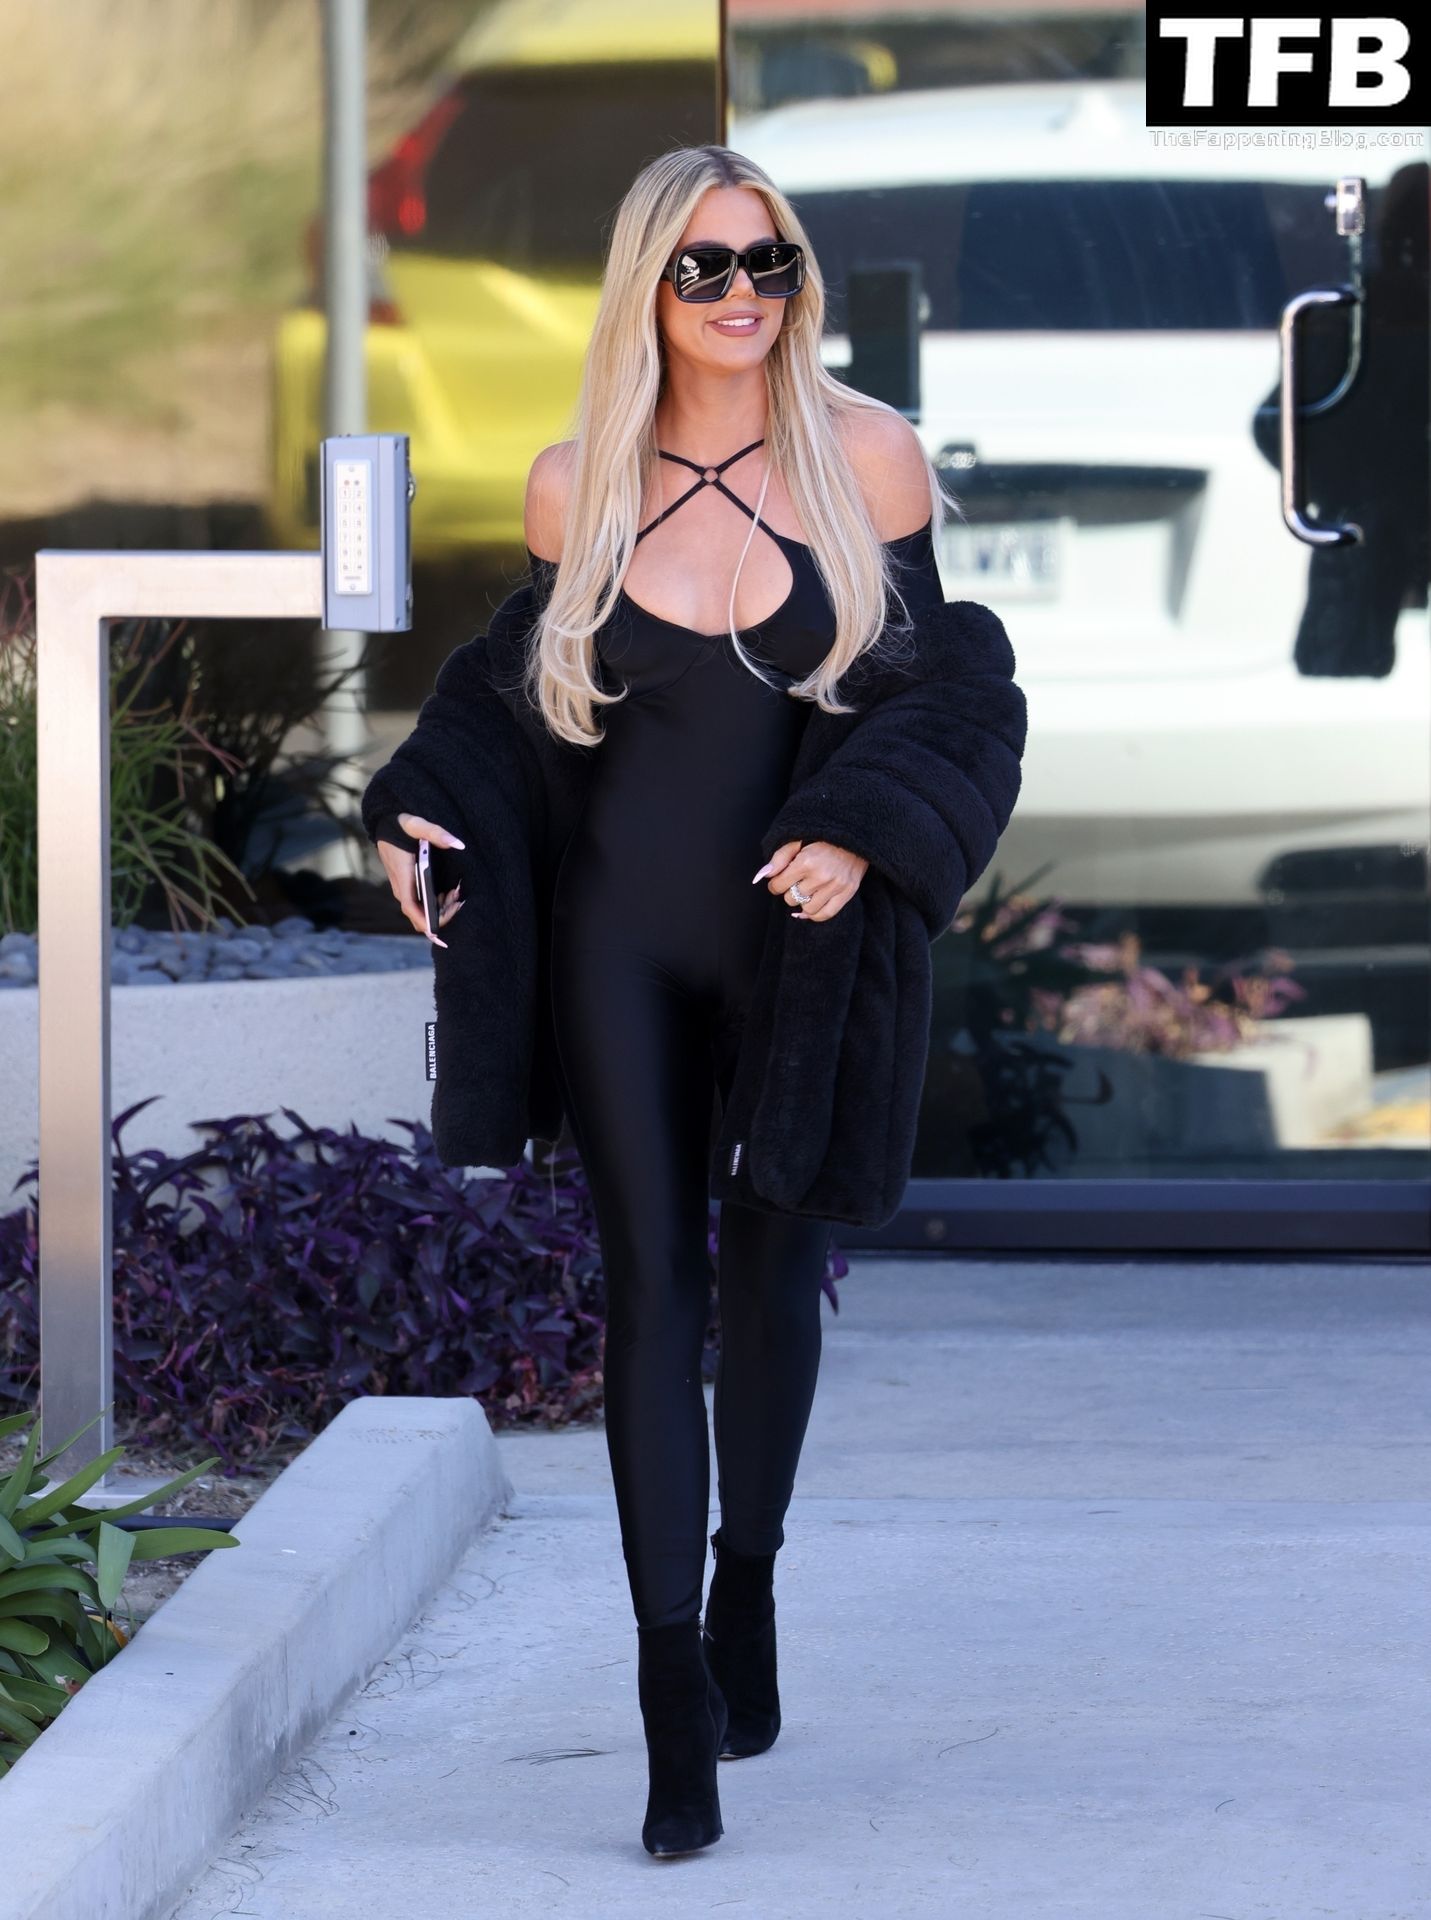 Khloe-Kardashian-Sexy-The-Fappening-Blog-24.jpg